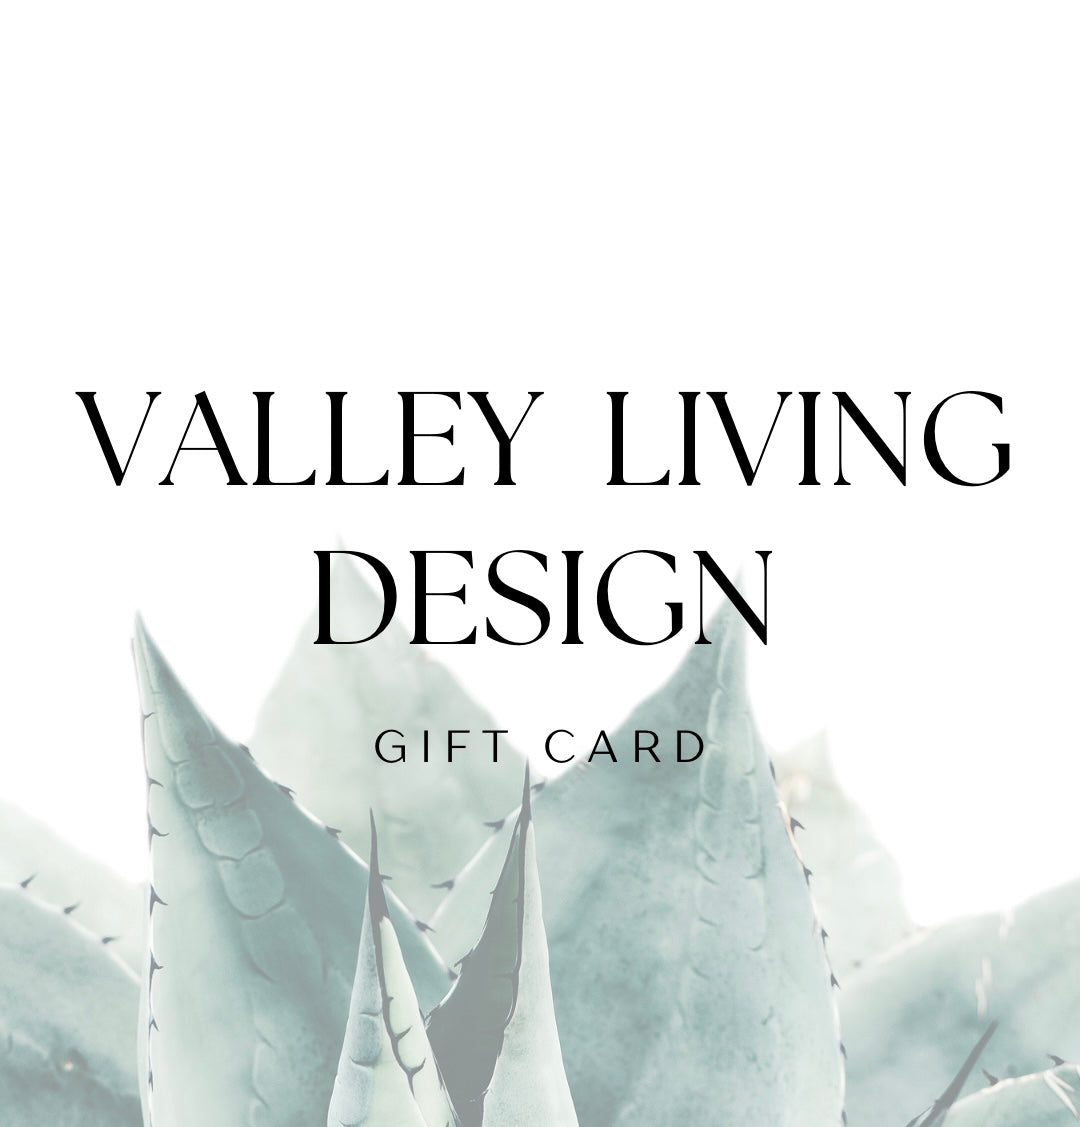 Valley Living Design gift card